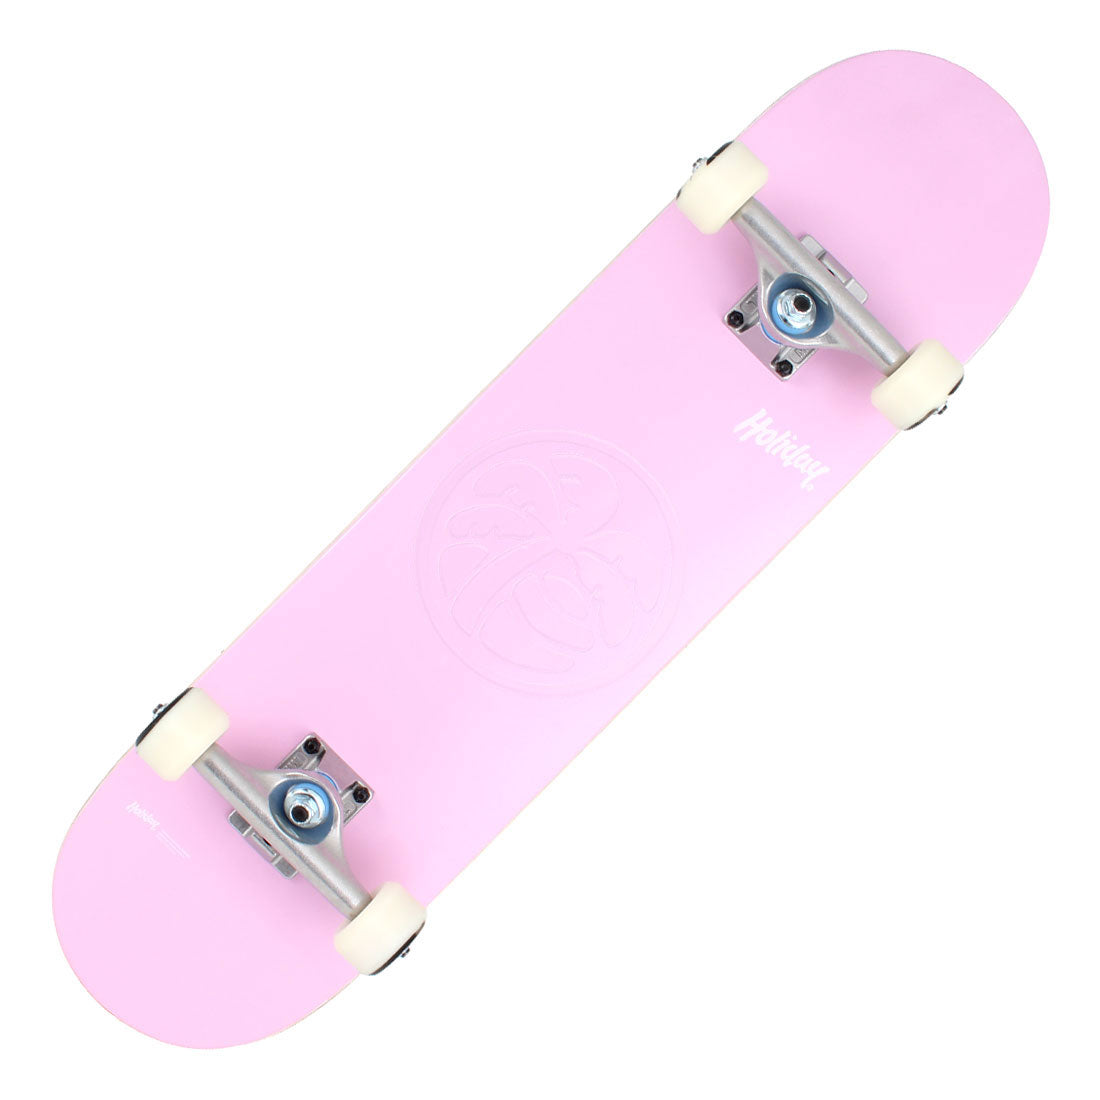 Holiday Sunday Best 7.75 Complete - Pastel Pink Skateboard Completes Modern Street